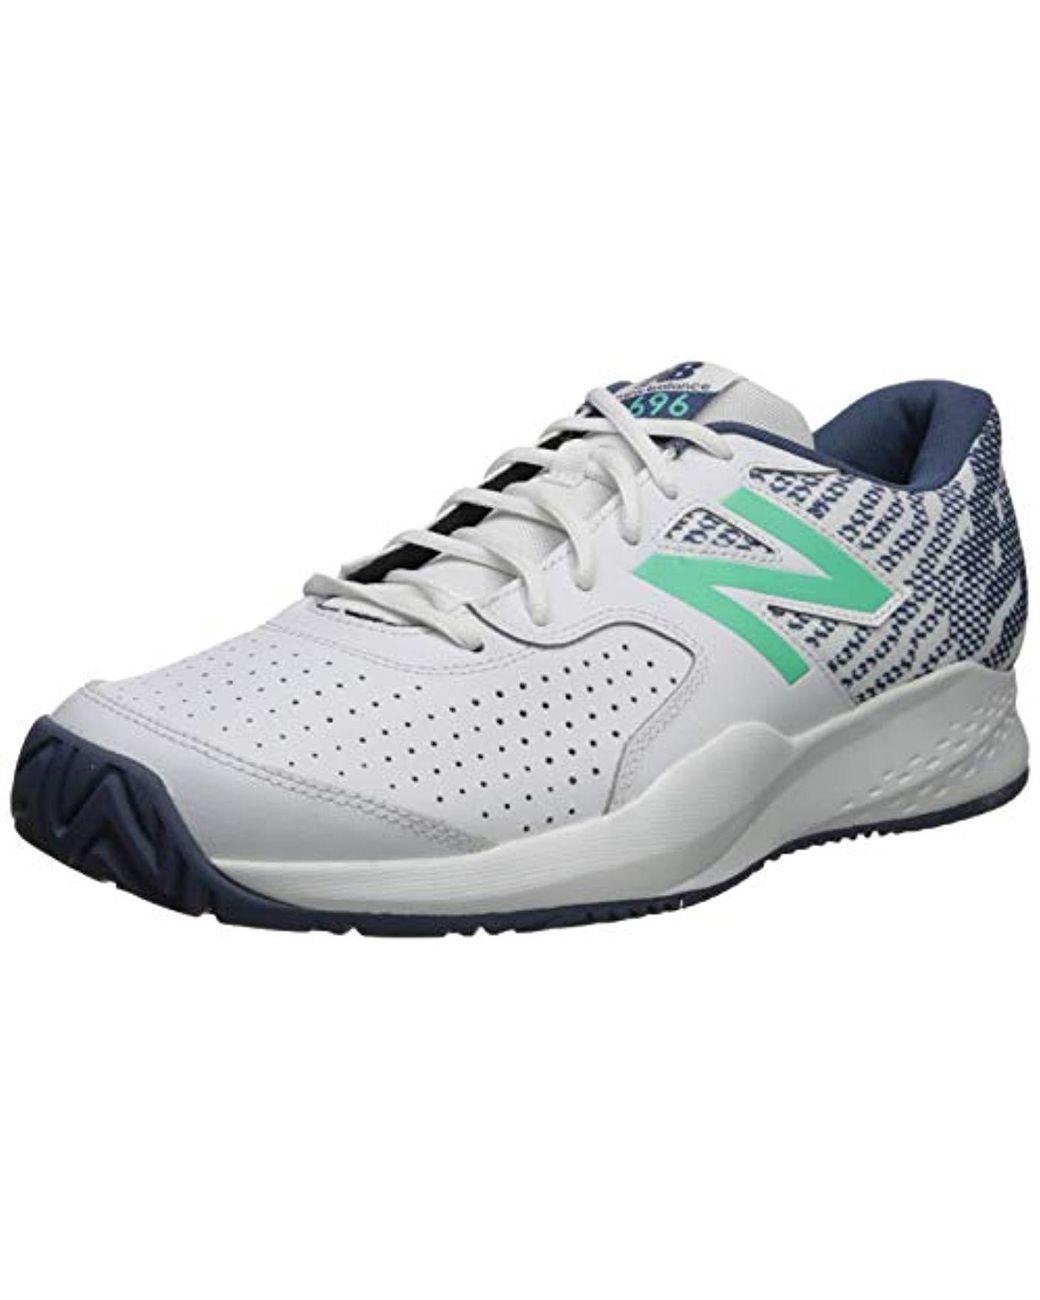 New Balance 696v3 Hard Court Tennis Shoe, White/emerald, 1.5 D Us for ...